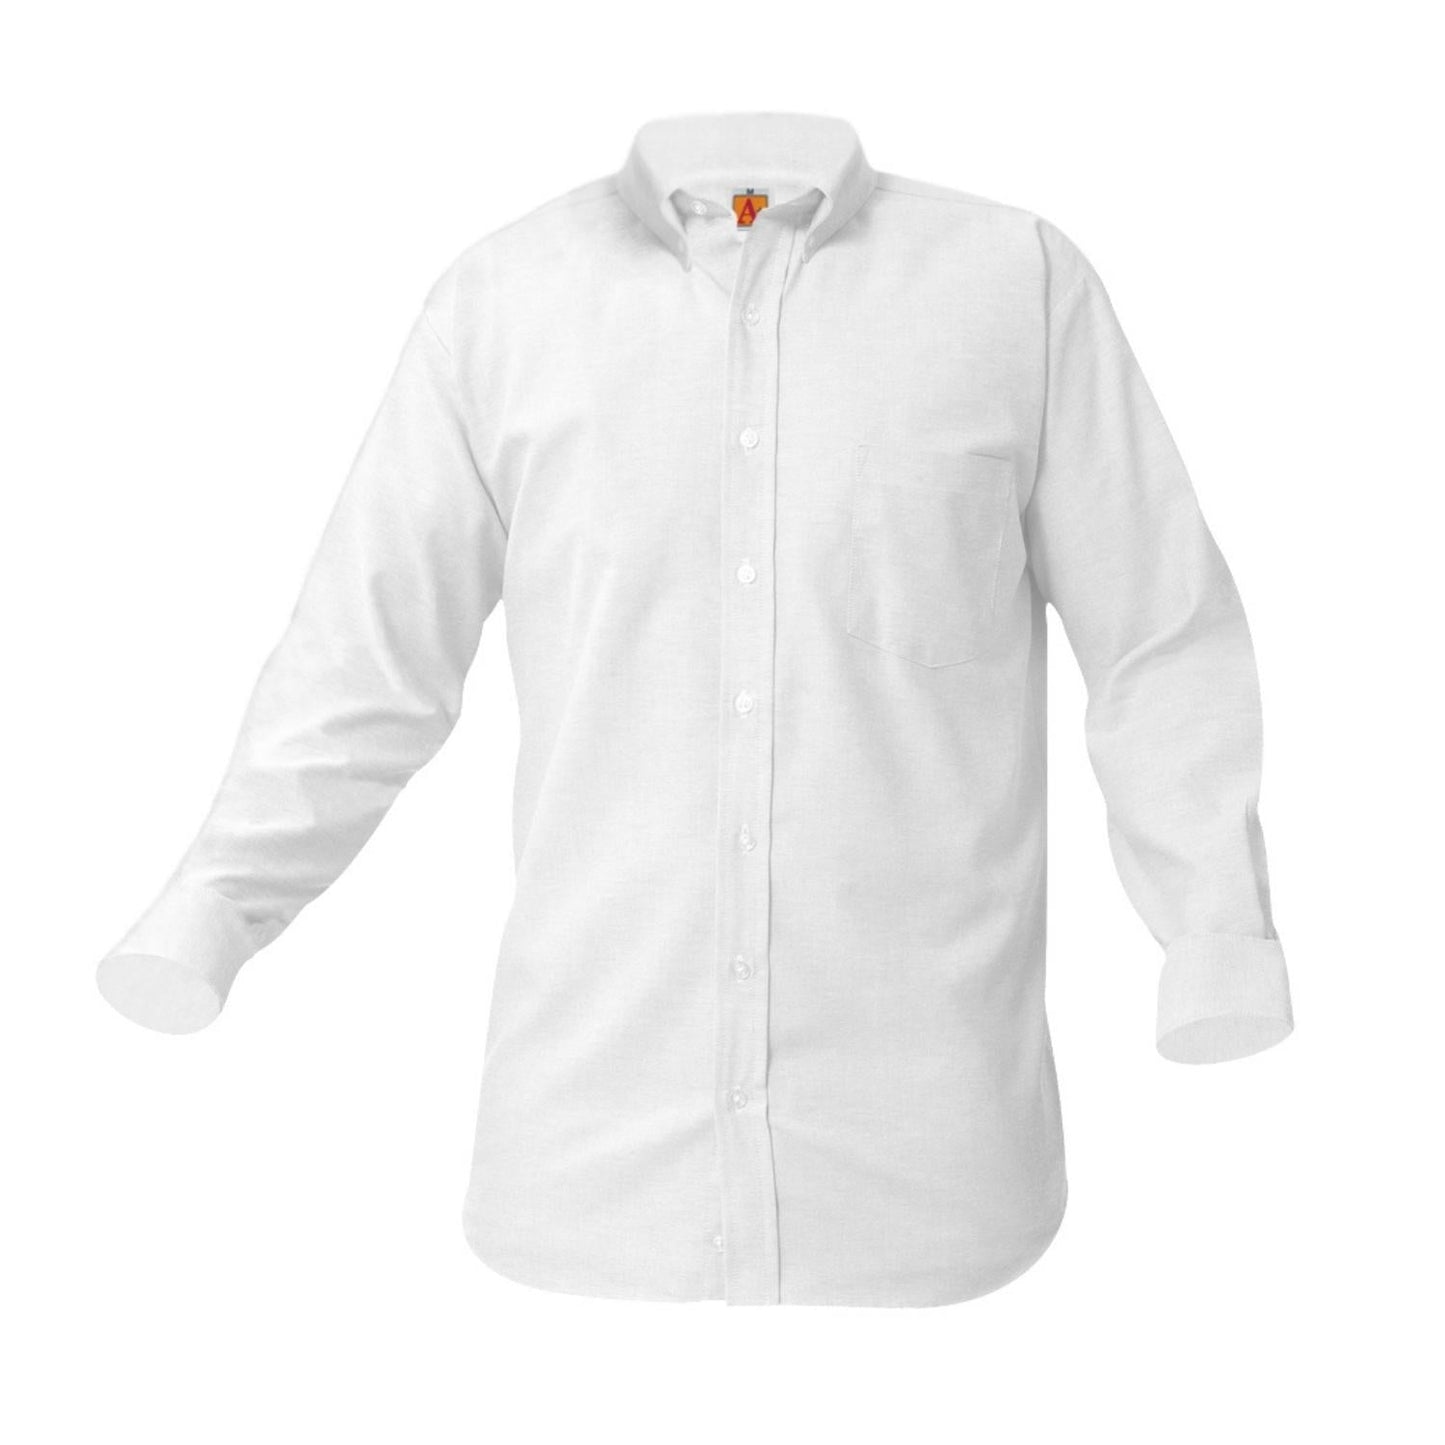 Oxford Long Sleeve Shirt (Male) - 1105